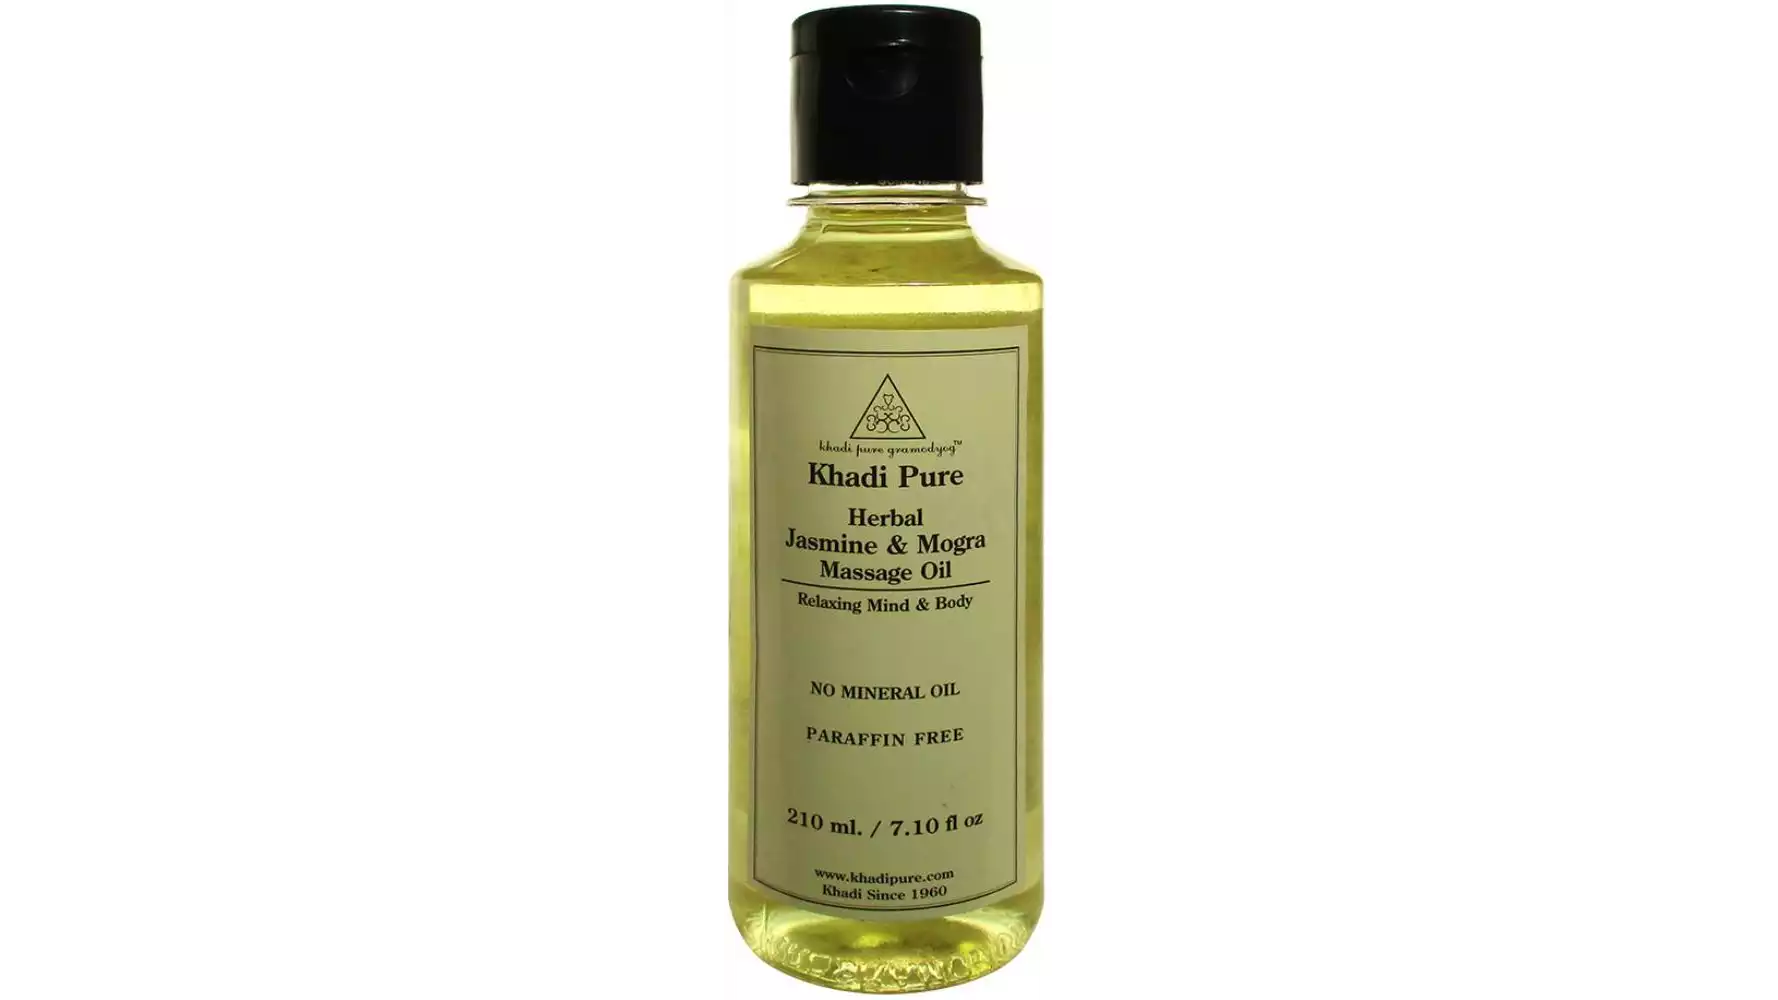 Khadi Pure Jasmine & Mogra Massage Oil Paraffin-Mineral Oil Free (210ml)